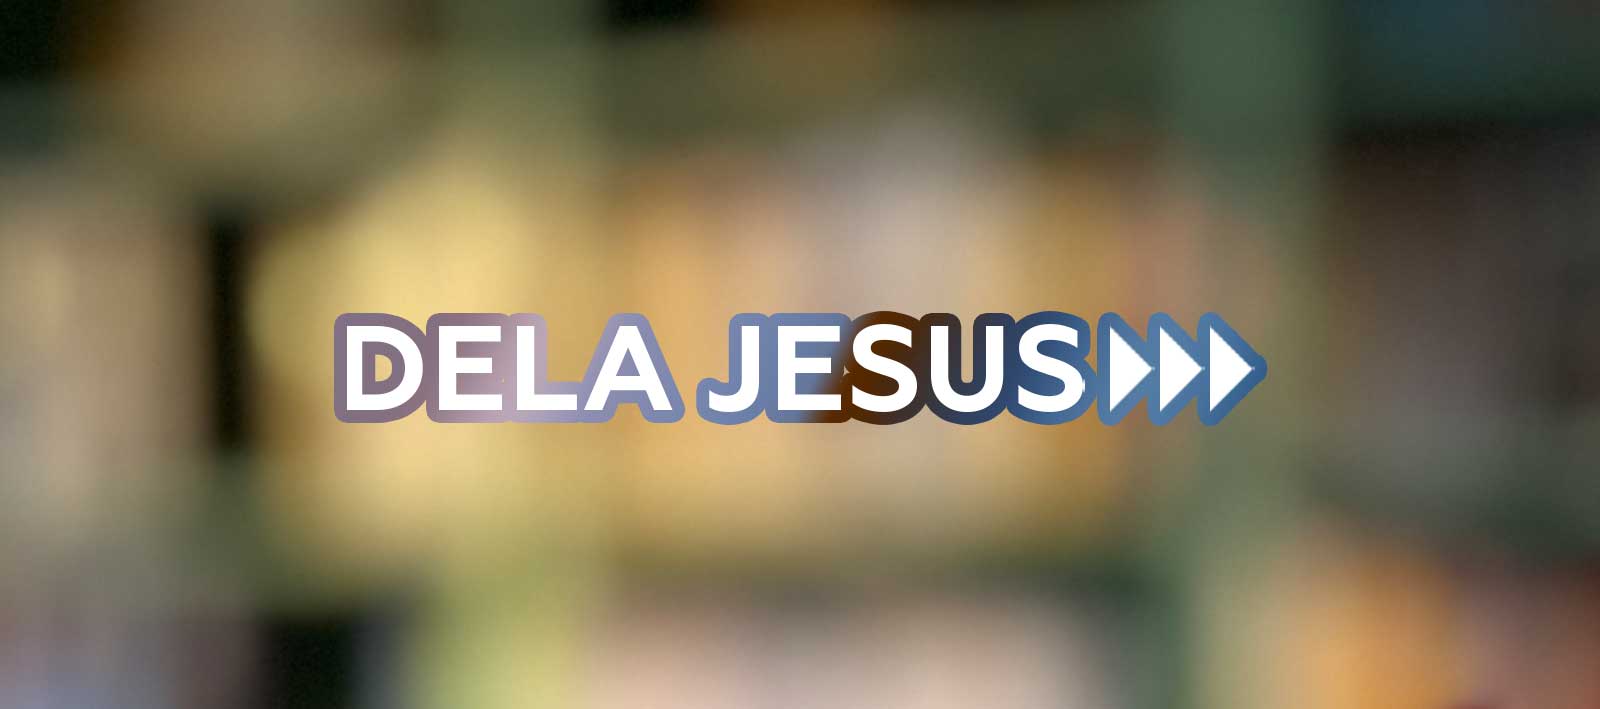 Dela Jesus